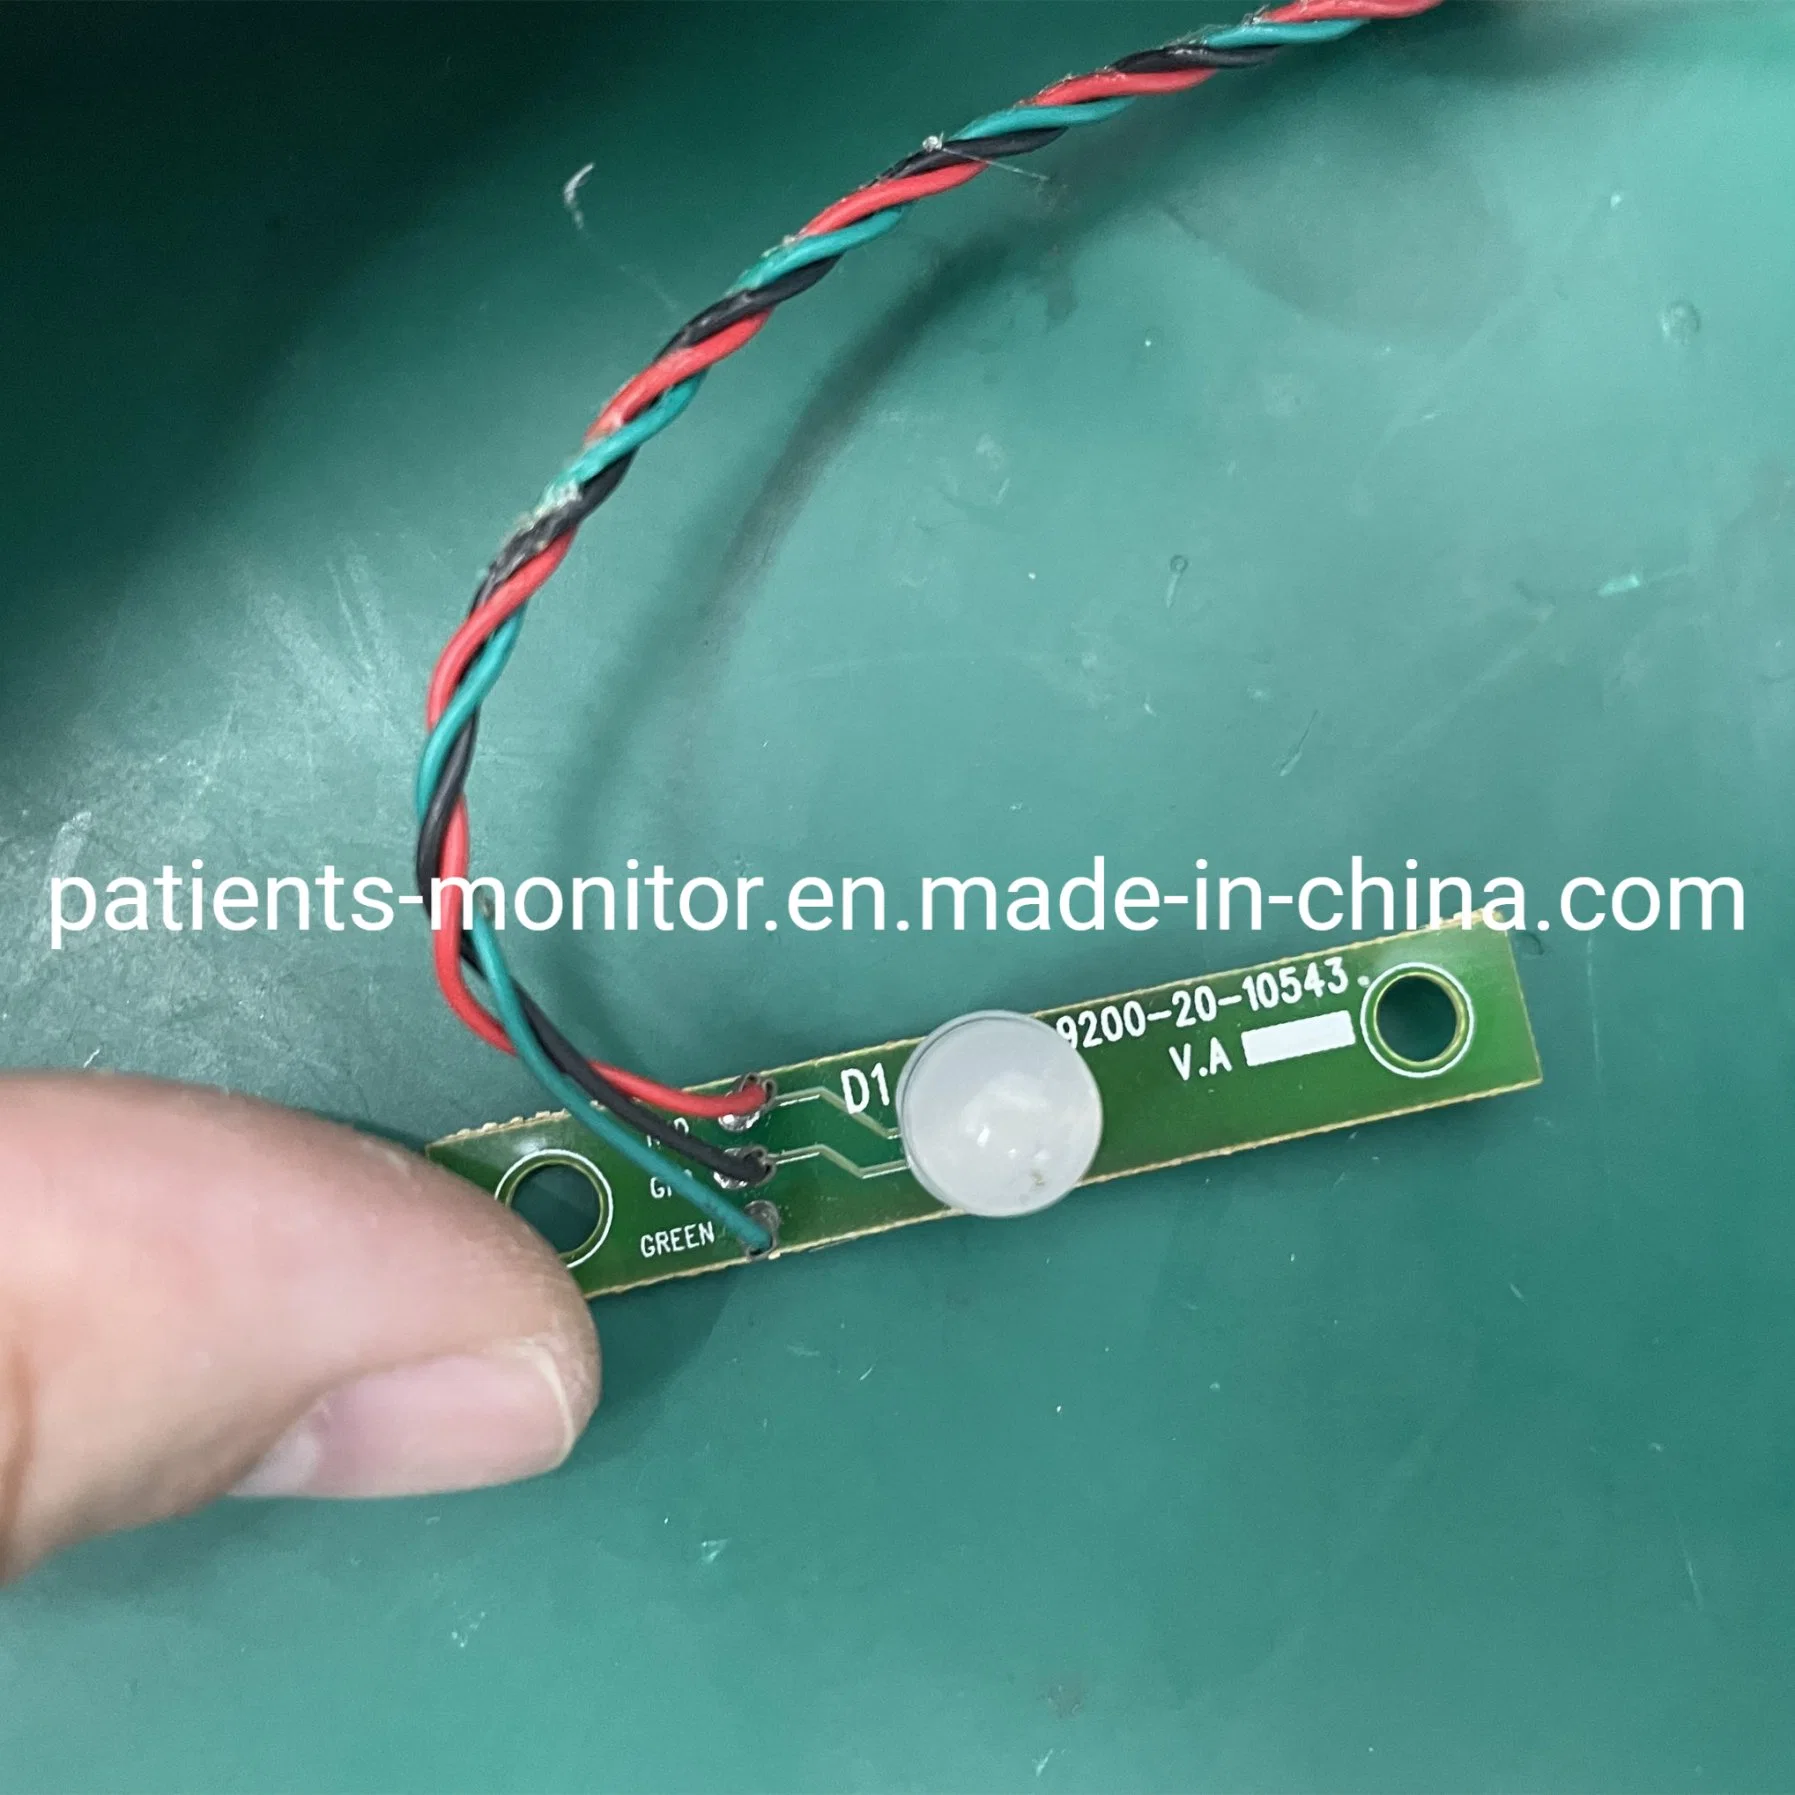 Mindray Pm-7000 Patient Monitor Alarm Indicator LED Light Board 9200-20-10543